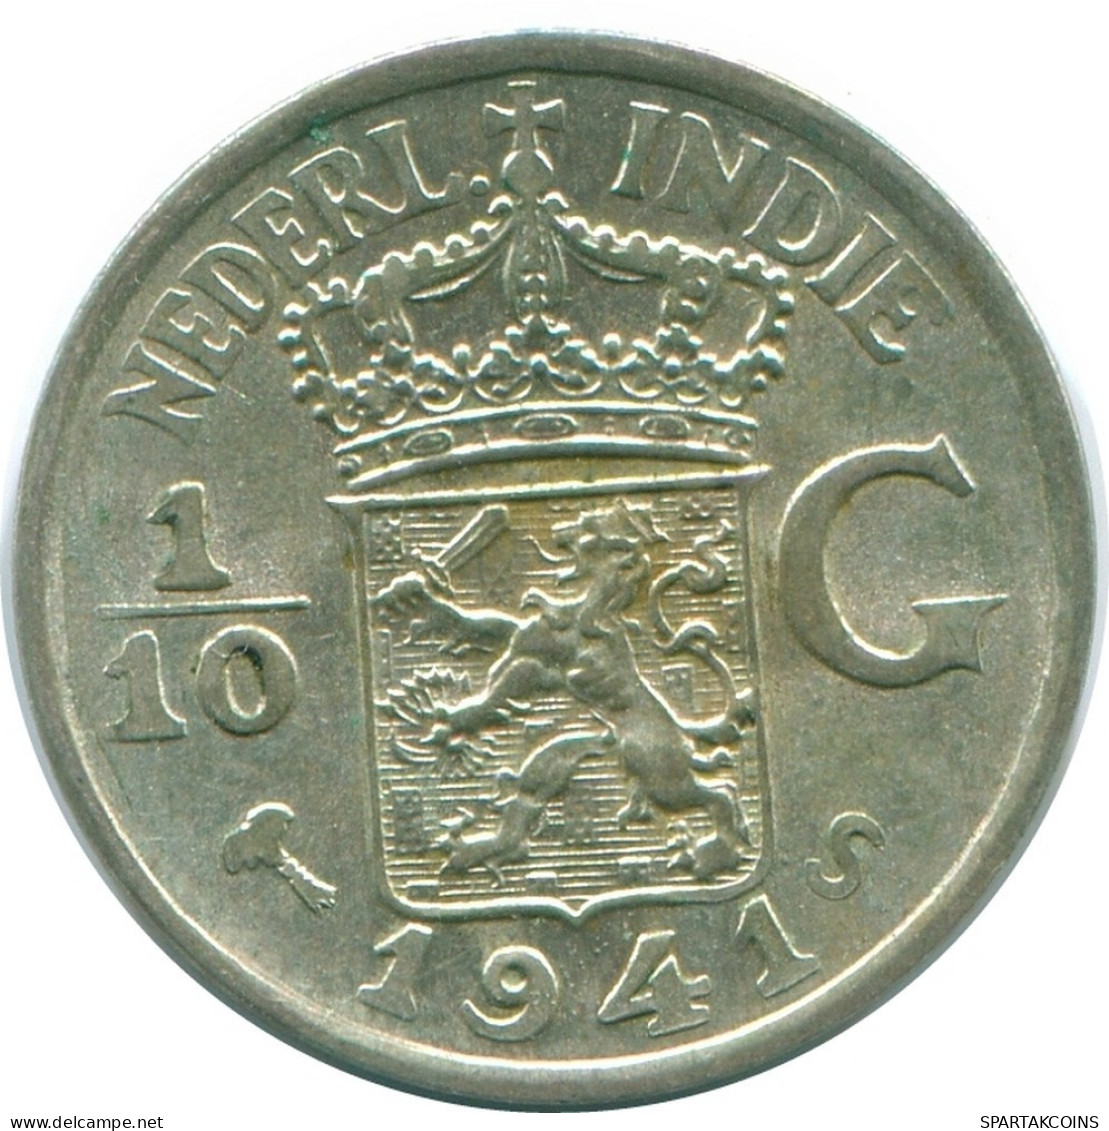 1/10 GULDEN 1941 S INDIAS ORIENTALES DE LOS PAÍSES BAJOS PLATA #NL13605.3.E.A - Dutch East Indies